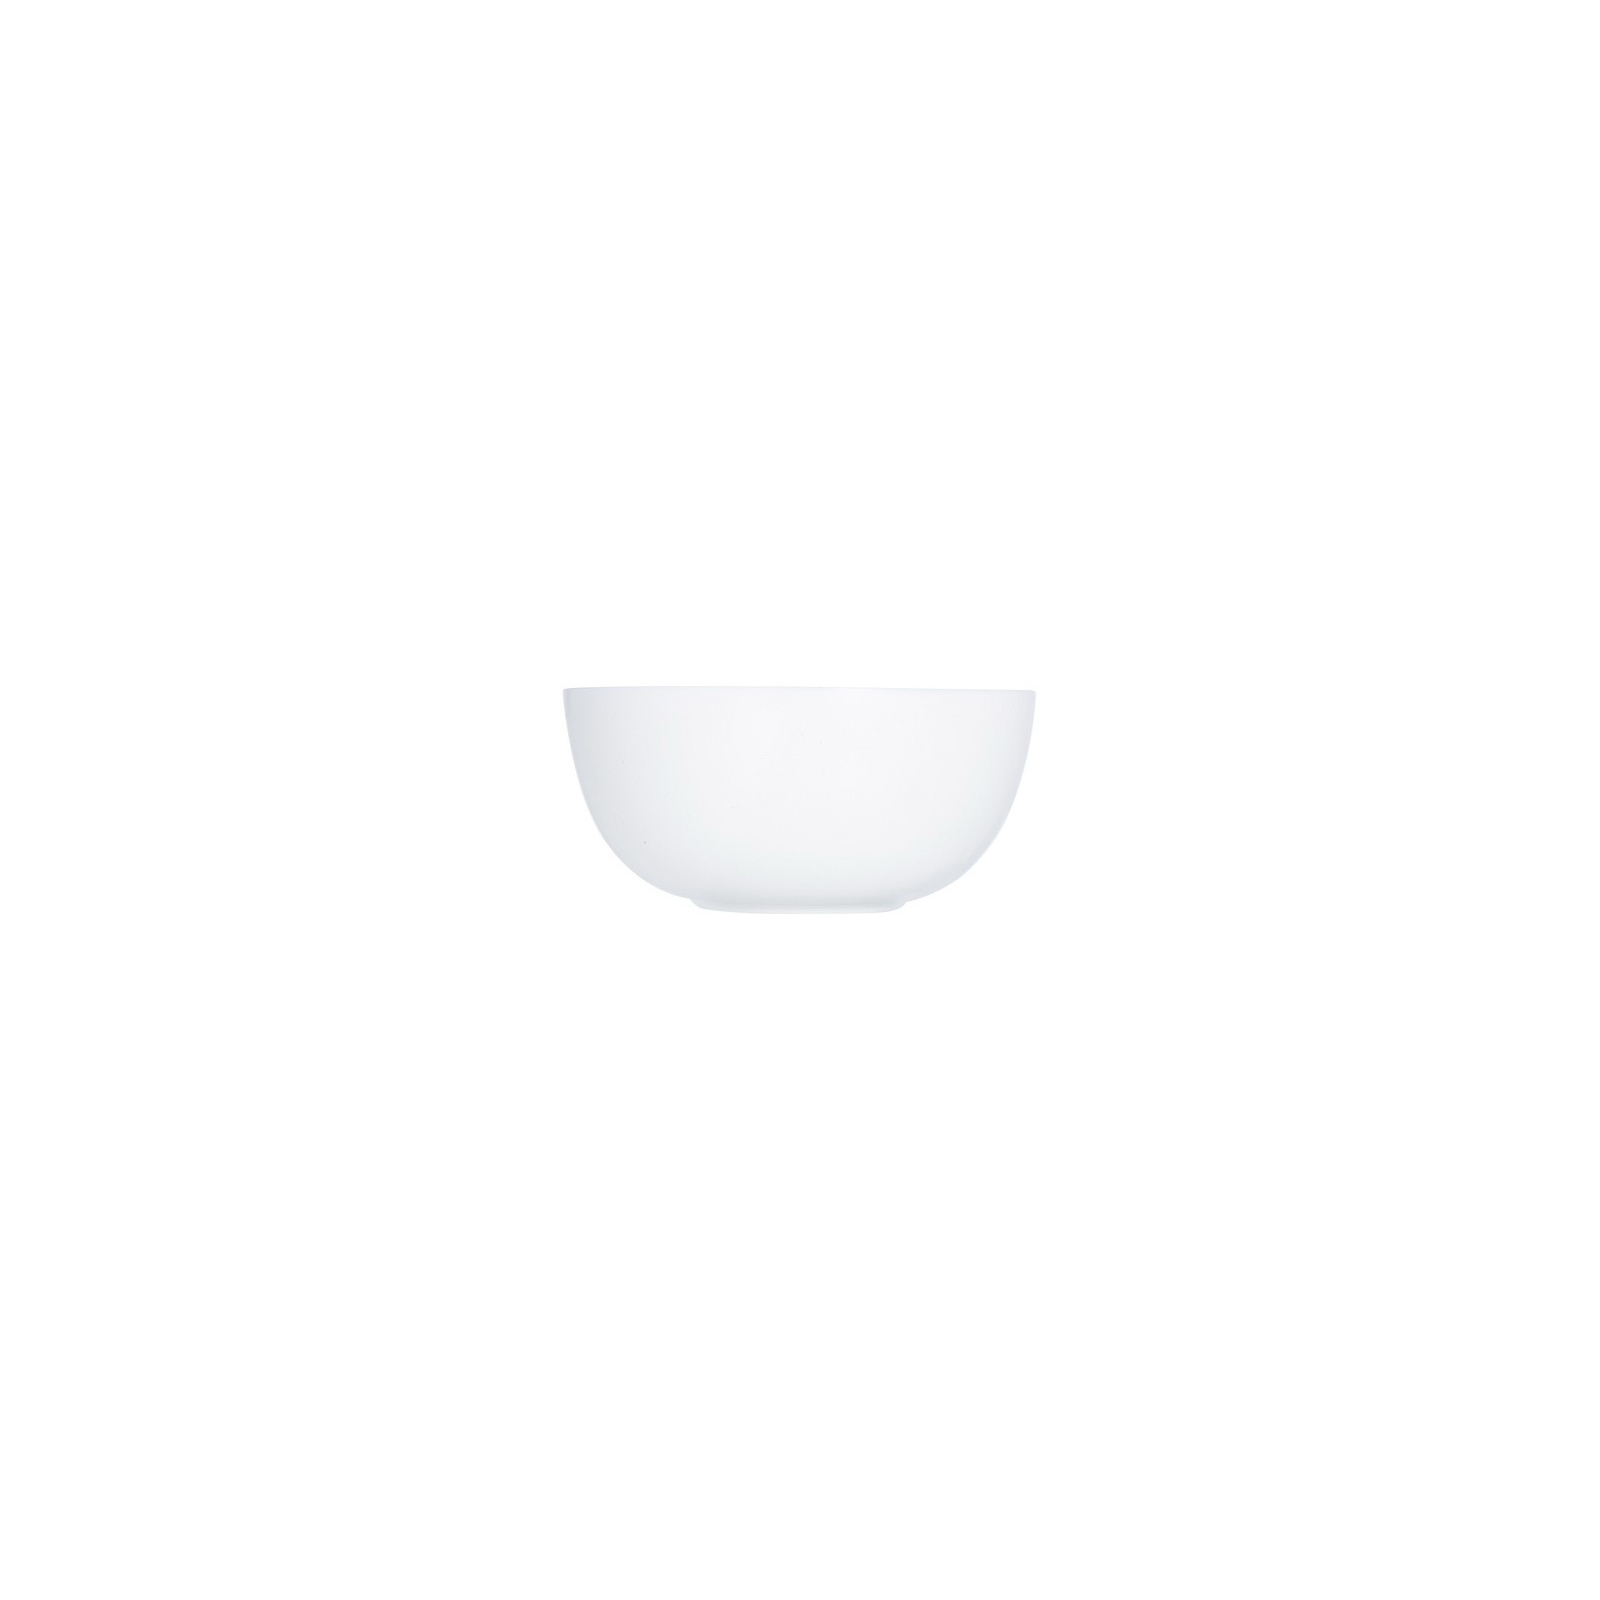 Салатник Luminarc Diwali 21 см White (D7410)